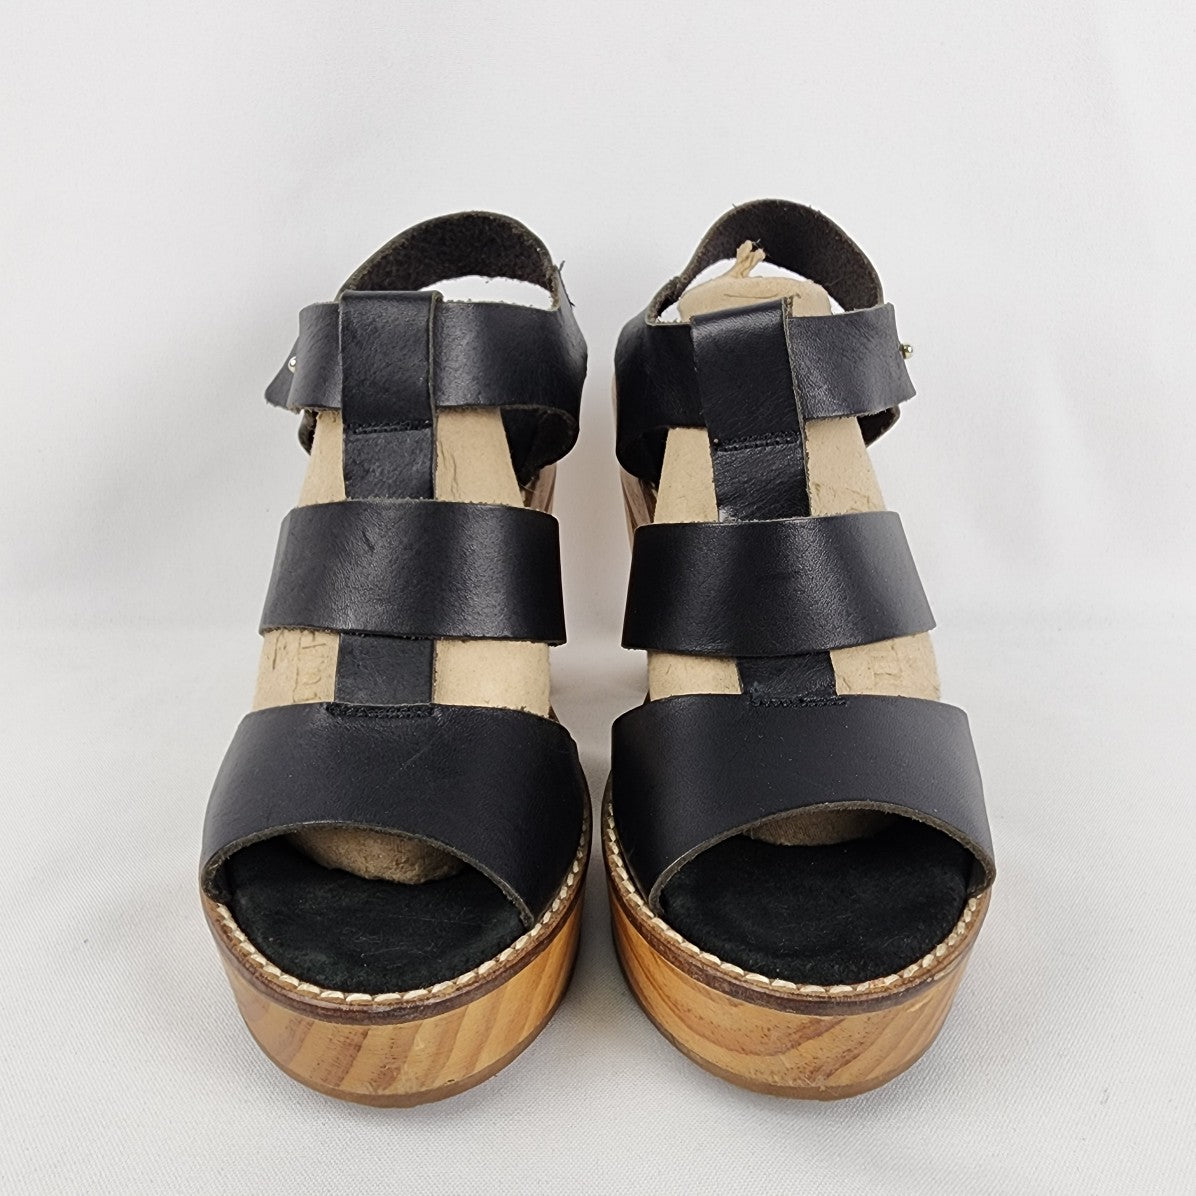 Free People Black Leather Wood Heel Sandals Size 8